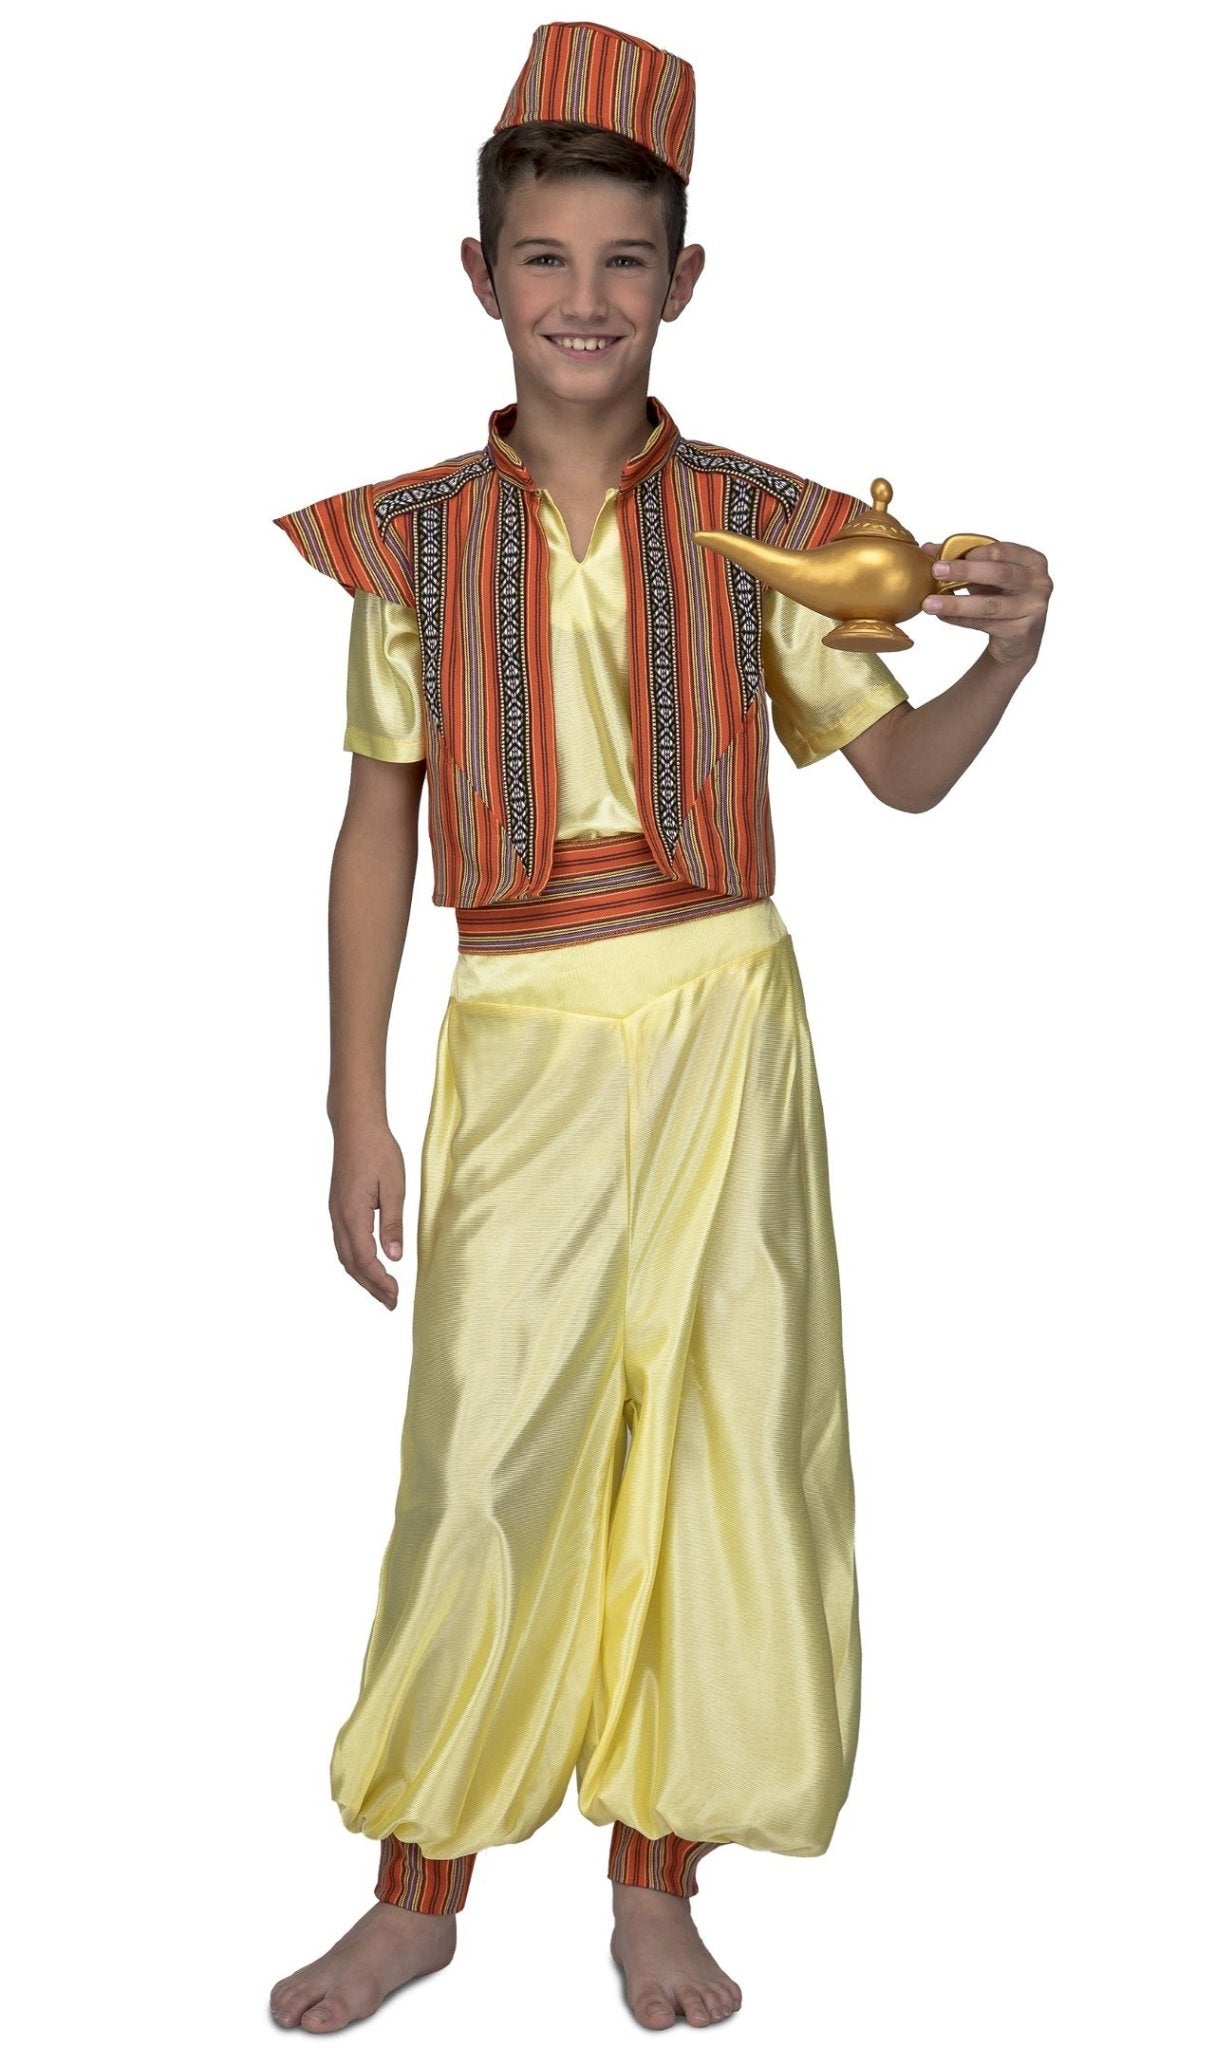 Disfraz de Aladdin para Niño